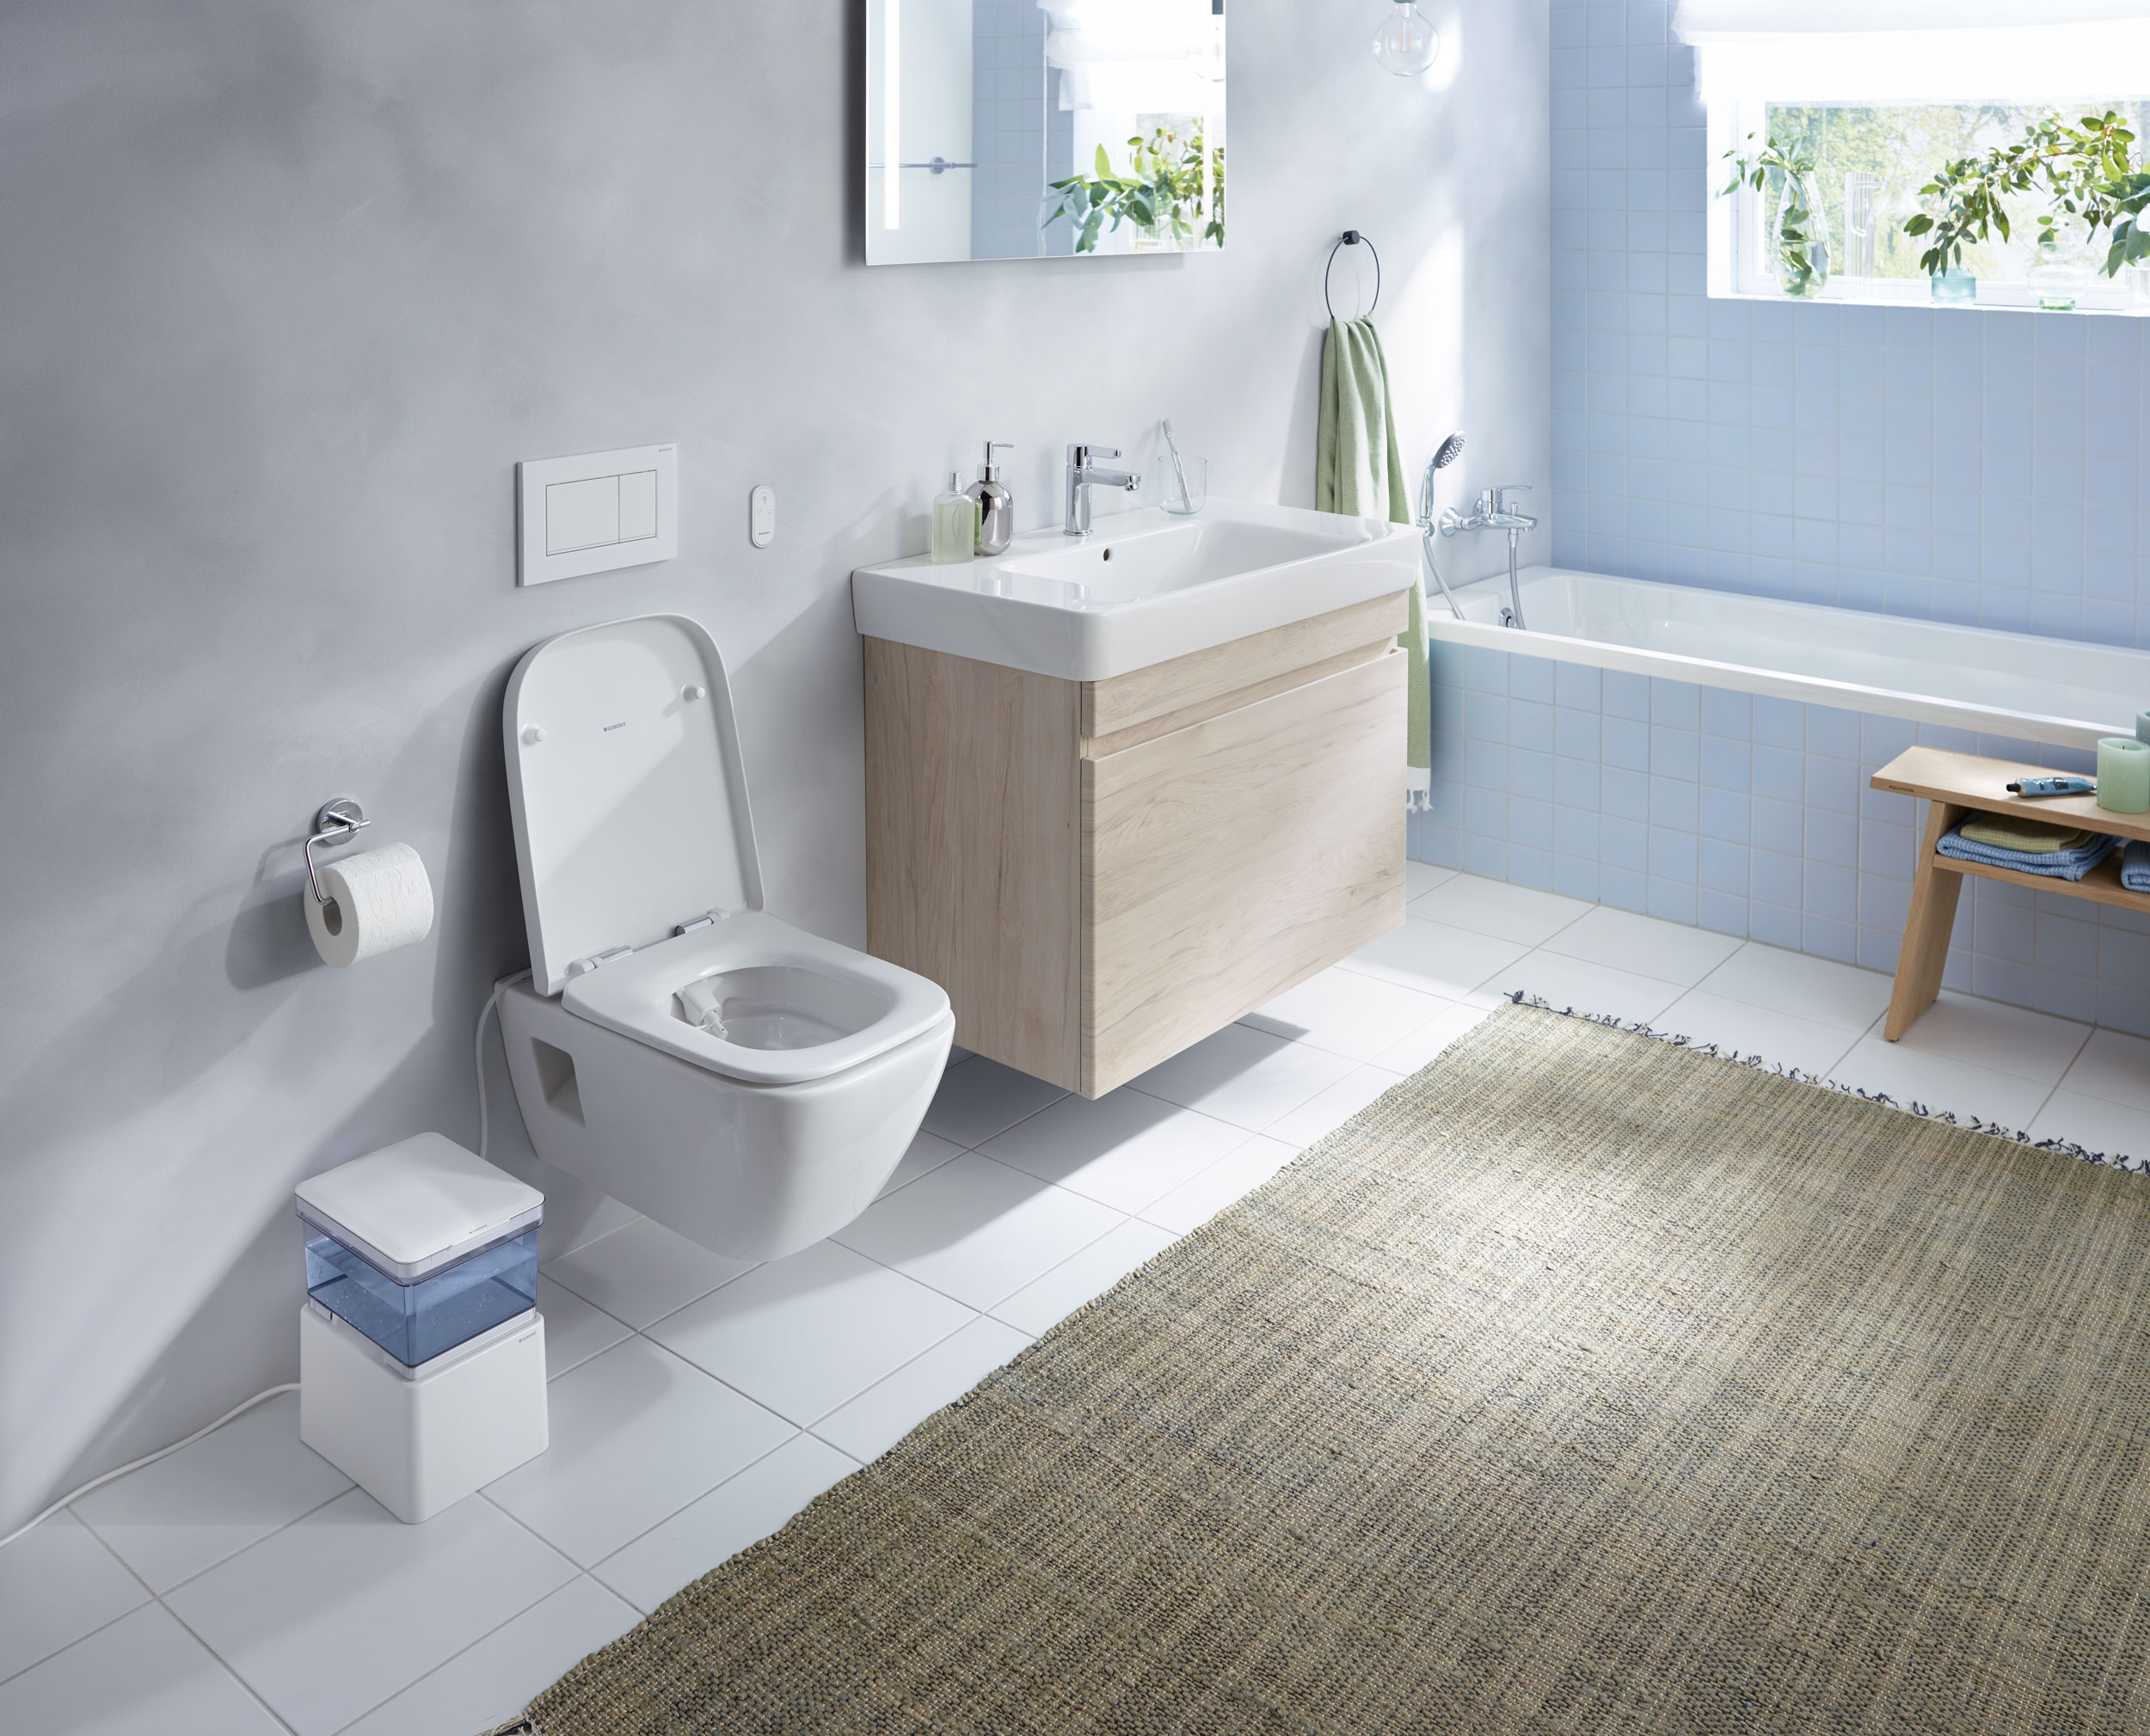 Geberit AquaClean Cama Dusch-WC in blau-grauem Bad mit Rattanteppich